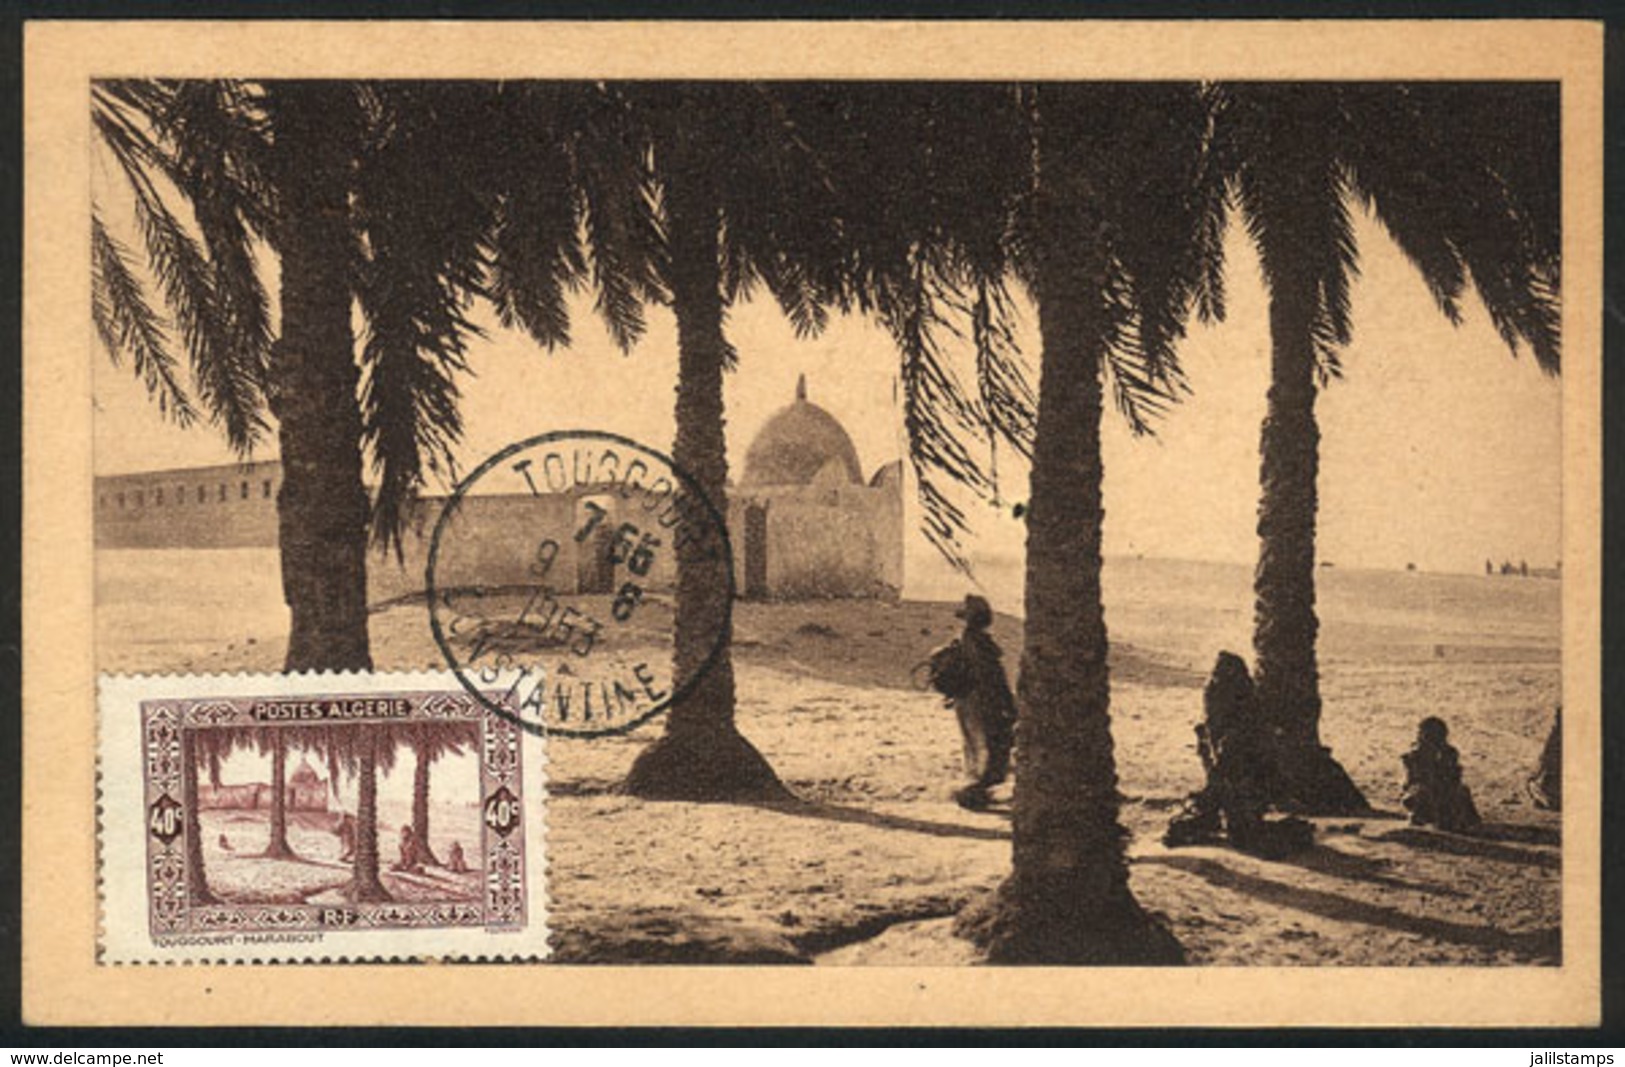 ALGERIA: TOUGGOURT: Tombs Of The Kings, Maximum Card Of 9/JUN/1953, VF Quality - Maximumkarten